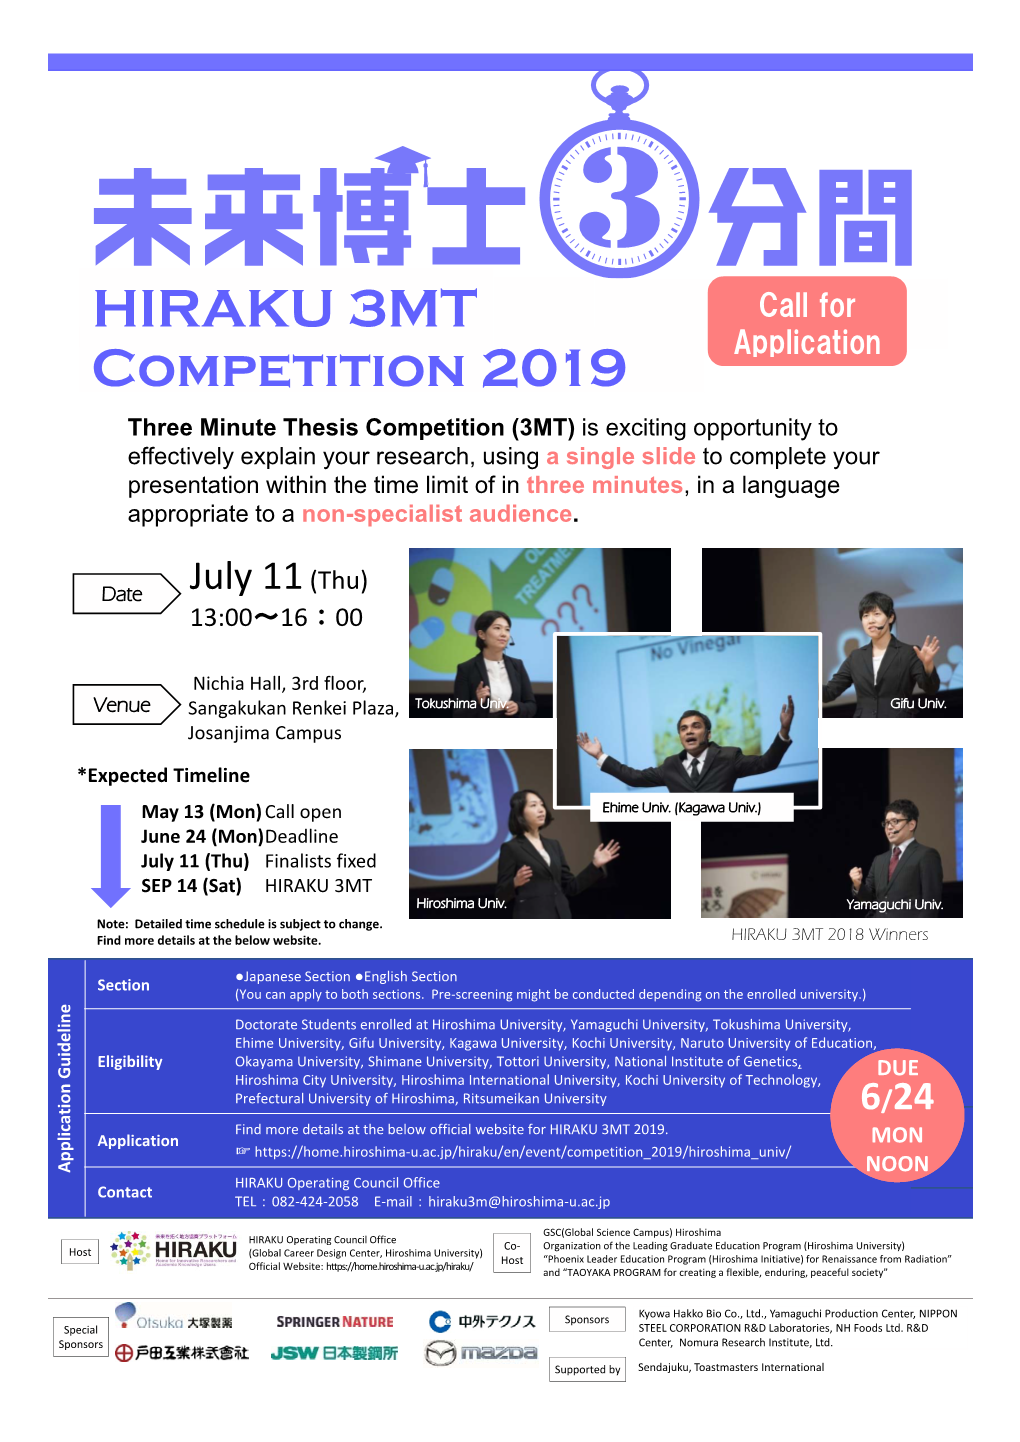 HIRAKU 3MT Competition 2019